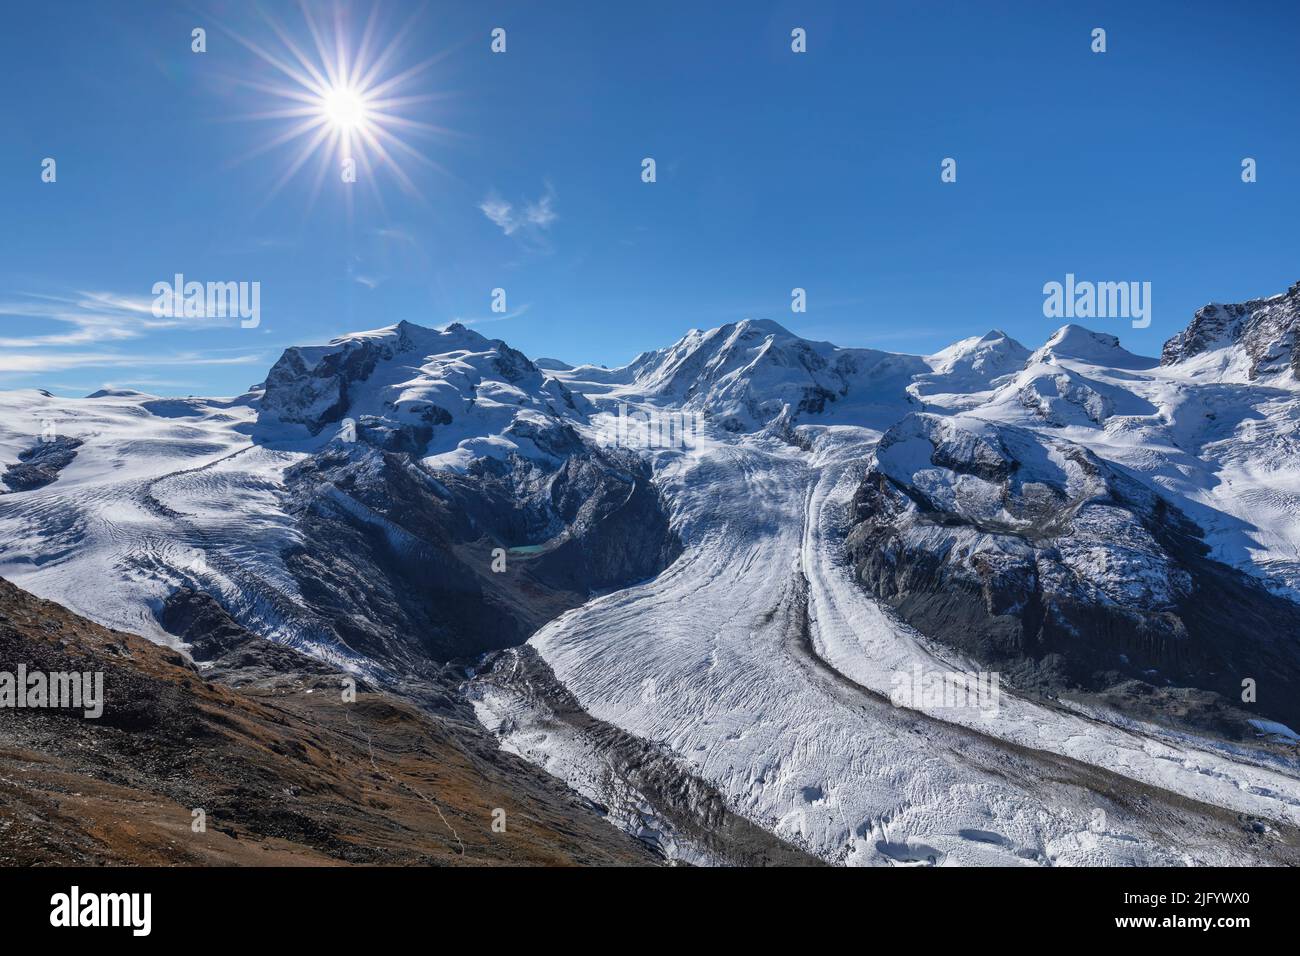 Monte Rosa massif with Dufourspitze, 4633m, and Liskamm with Gorner Glacier, Zermatt, Valais, Swiss Alps, Switzerland, Europe Stock Photo